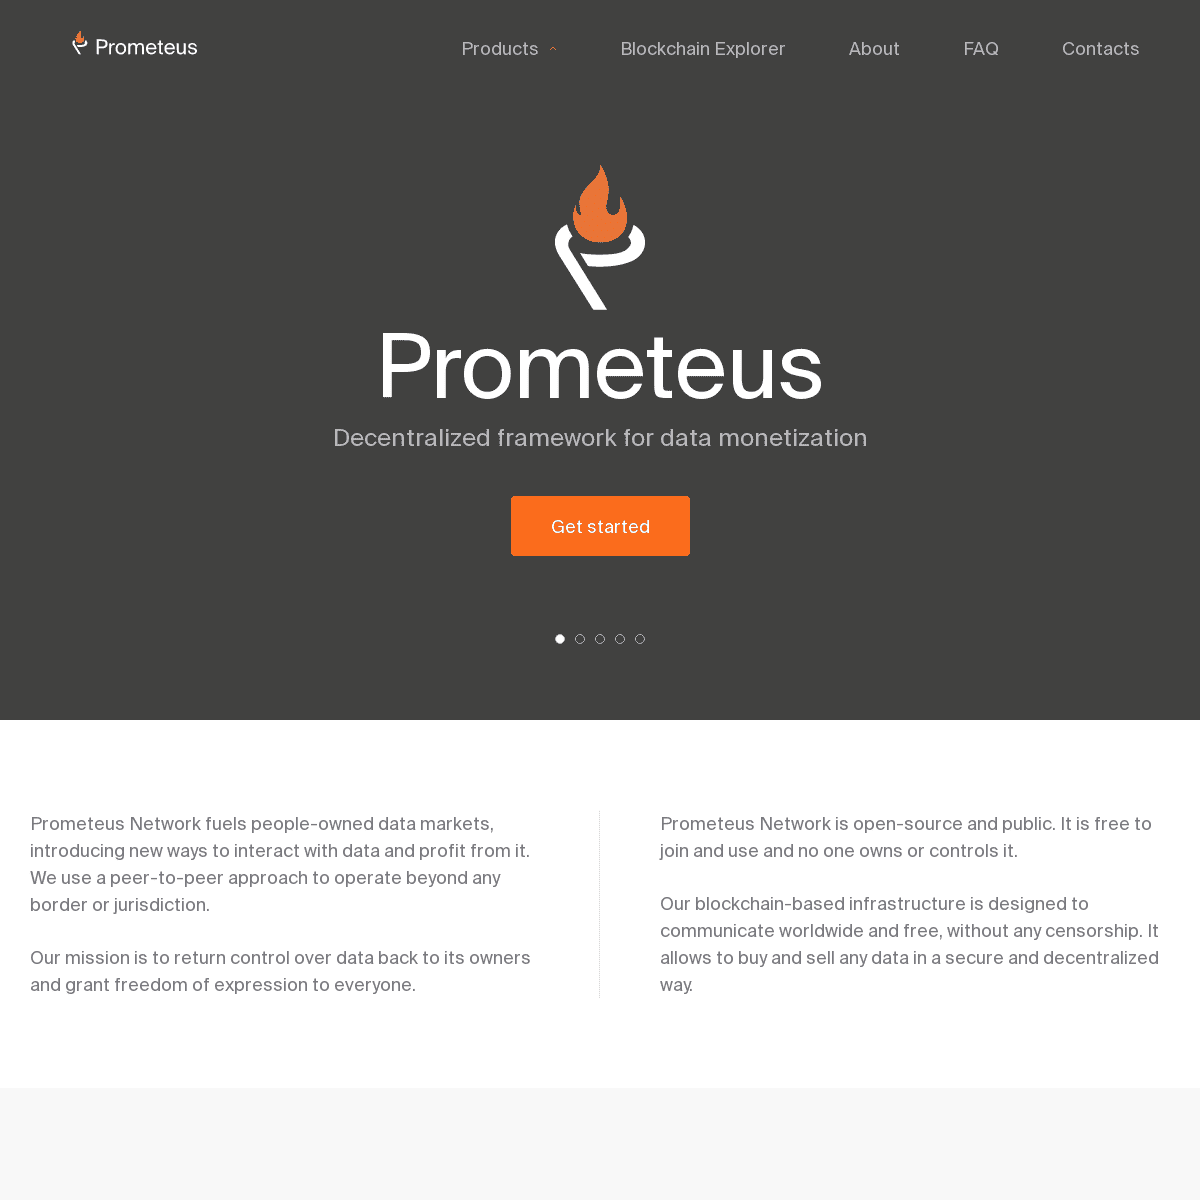 A complete backup of https://prometeus.io